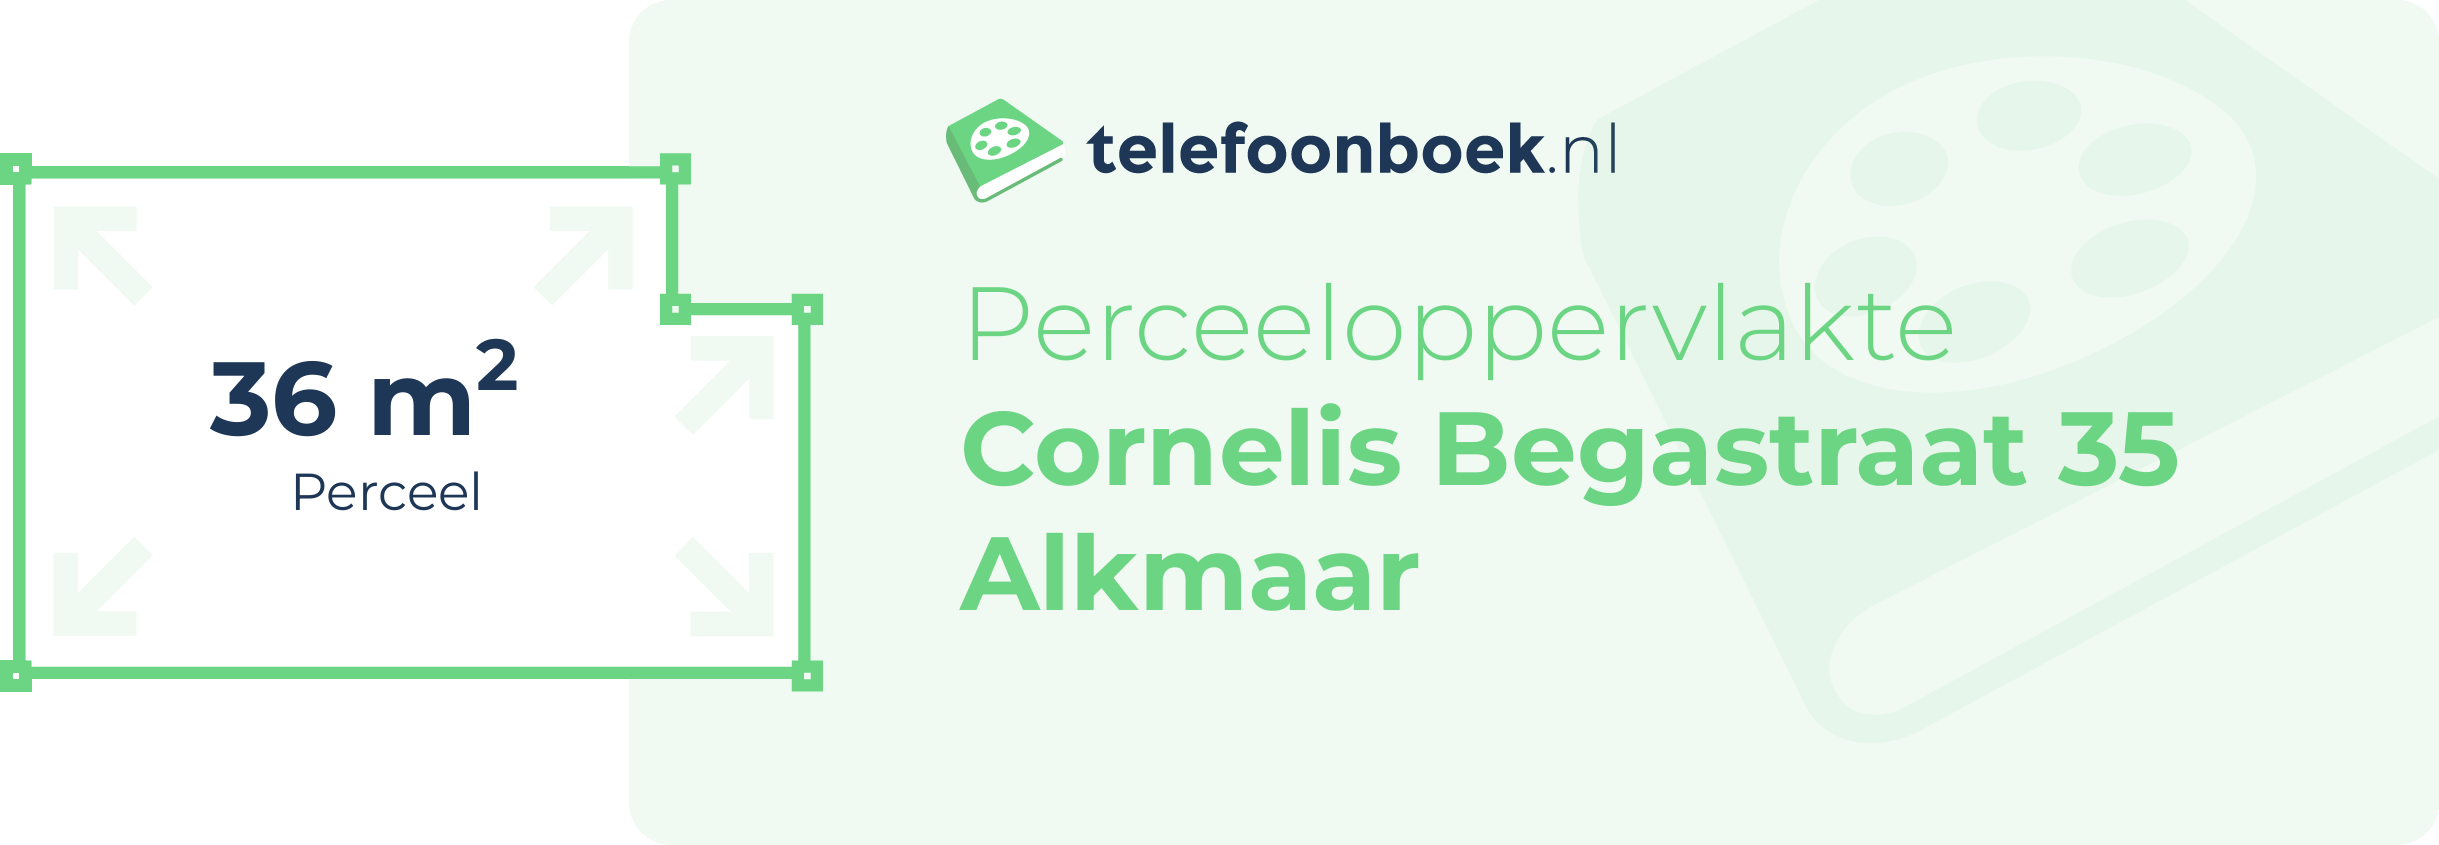 Perceeloppervlakte Cornelis Begastraat 35 Alkmaar